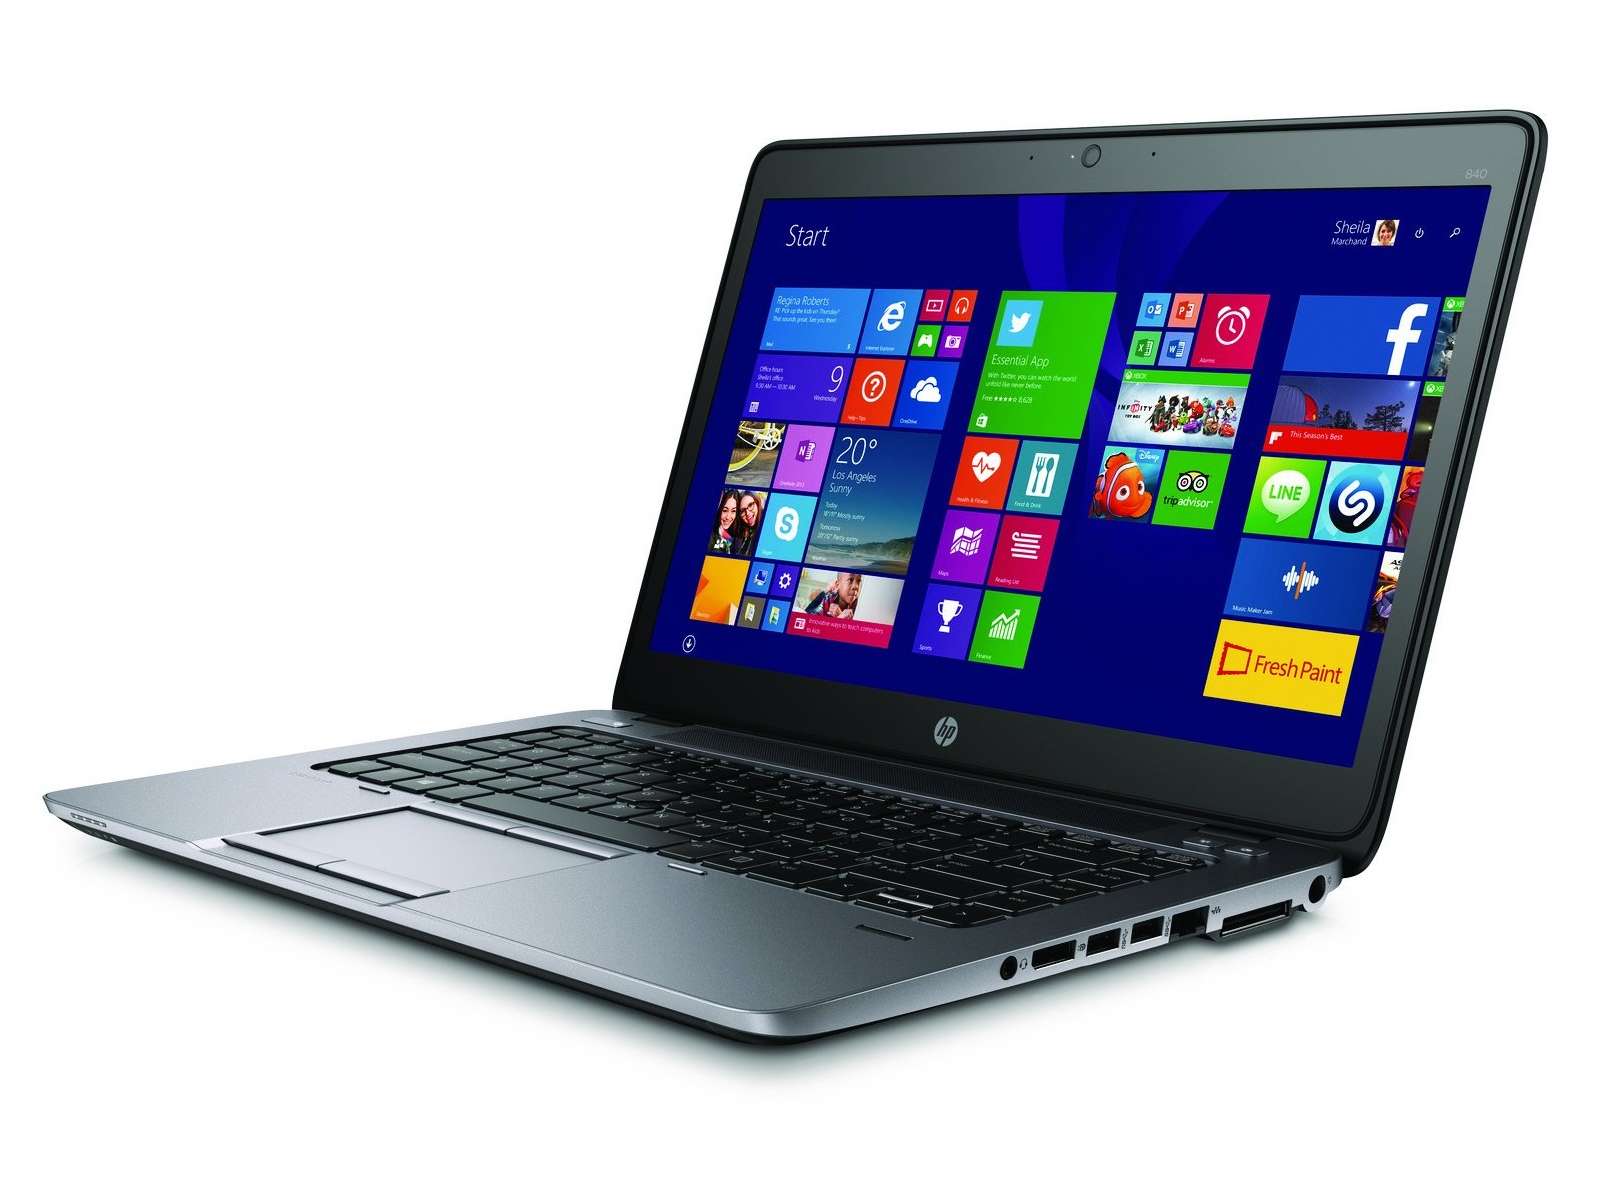 HP Elitebook 840 G2 (Core i5 5300U, 4GB, 320GB, Intel HD Graphics 5500, 14 inch)